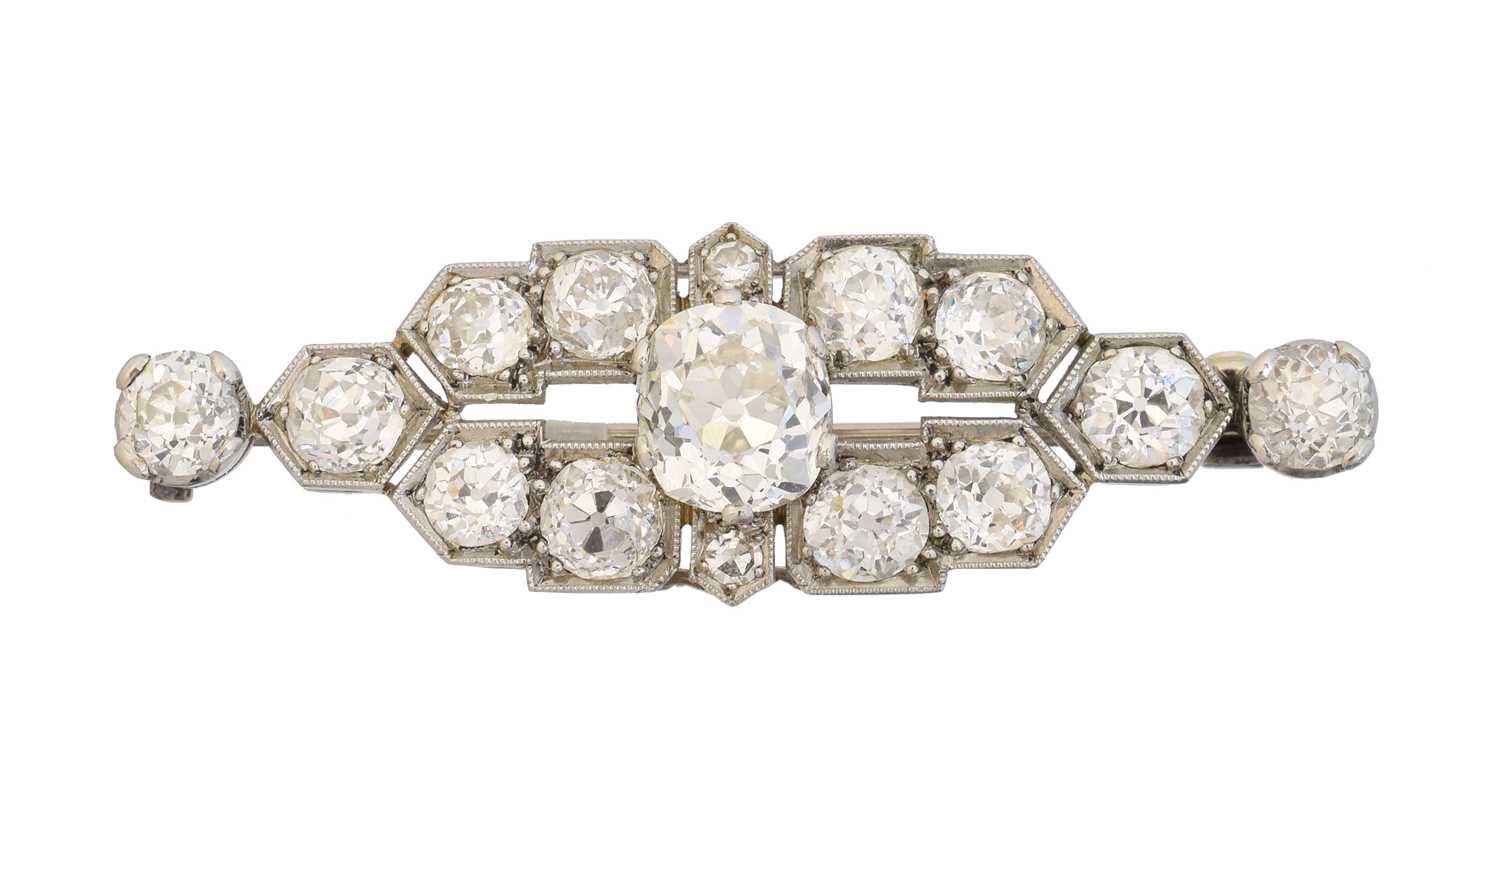 2 - An Art Deco diamond brooch,